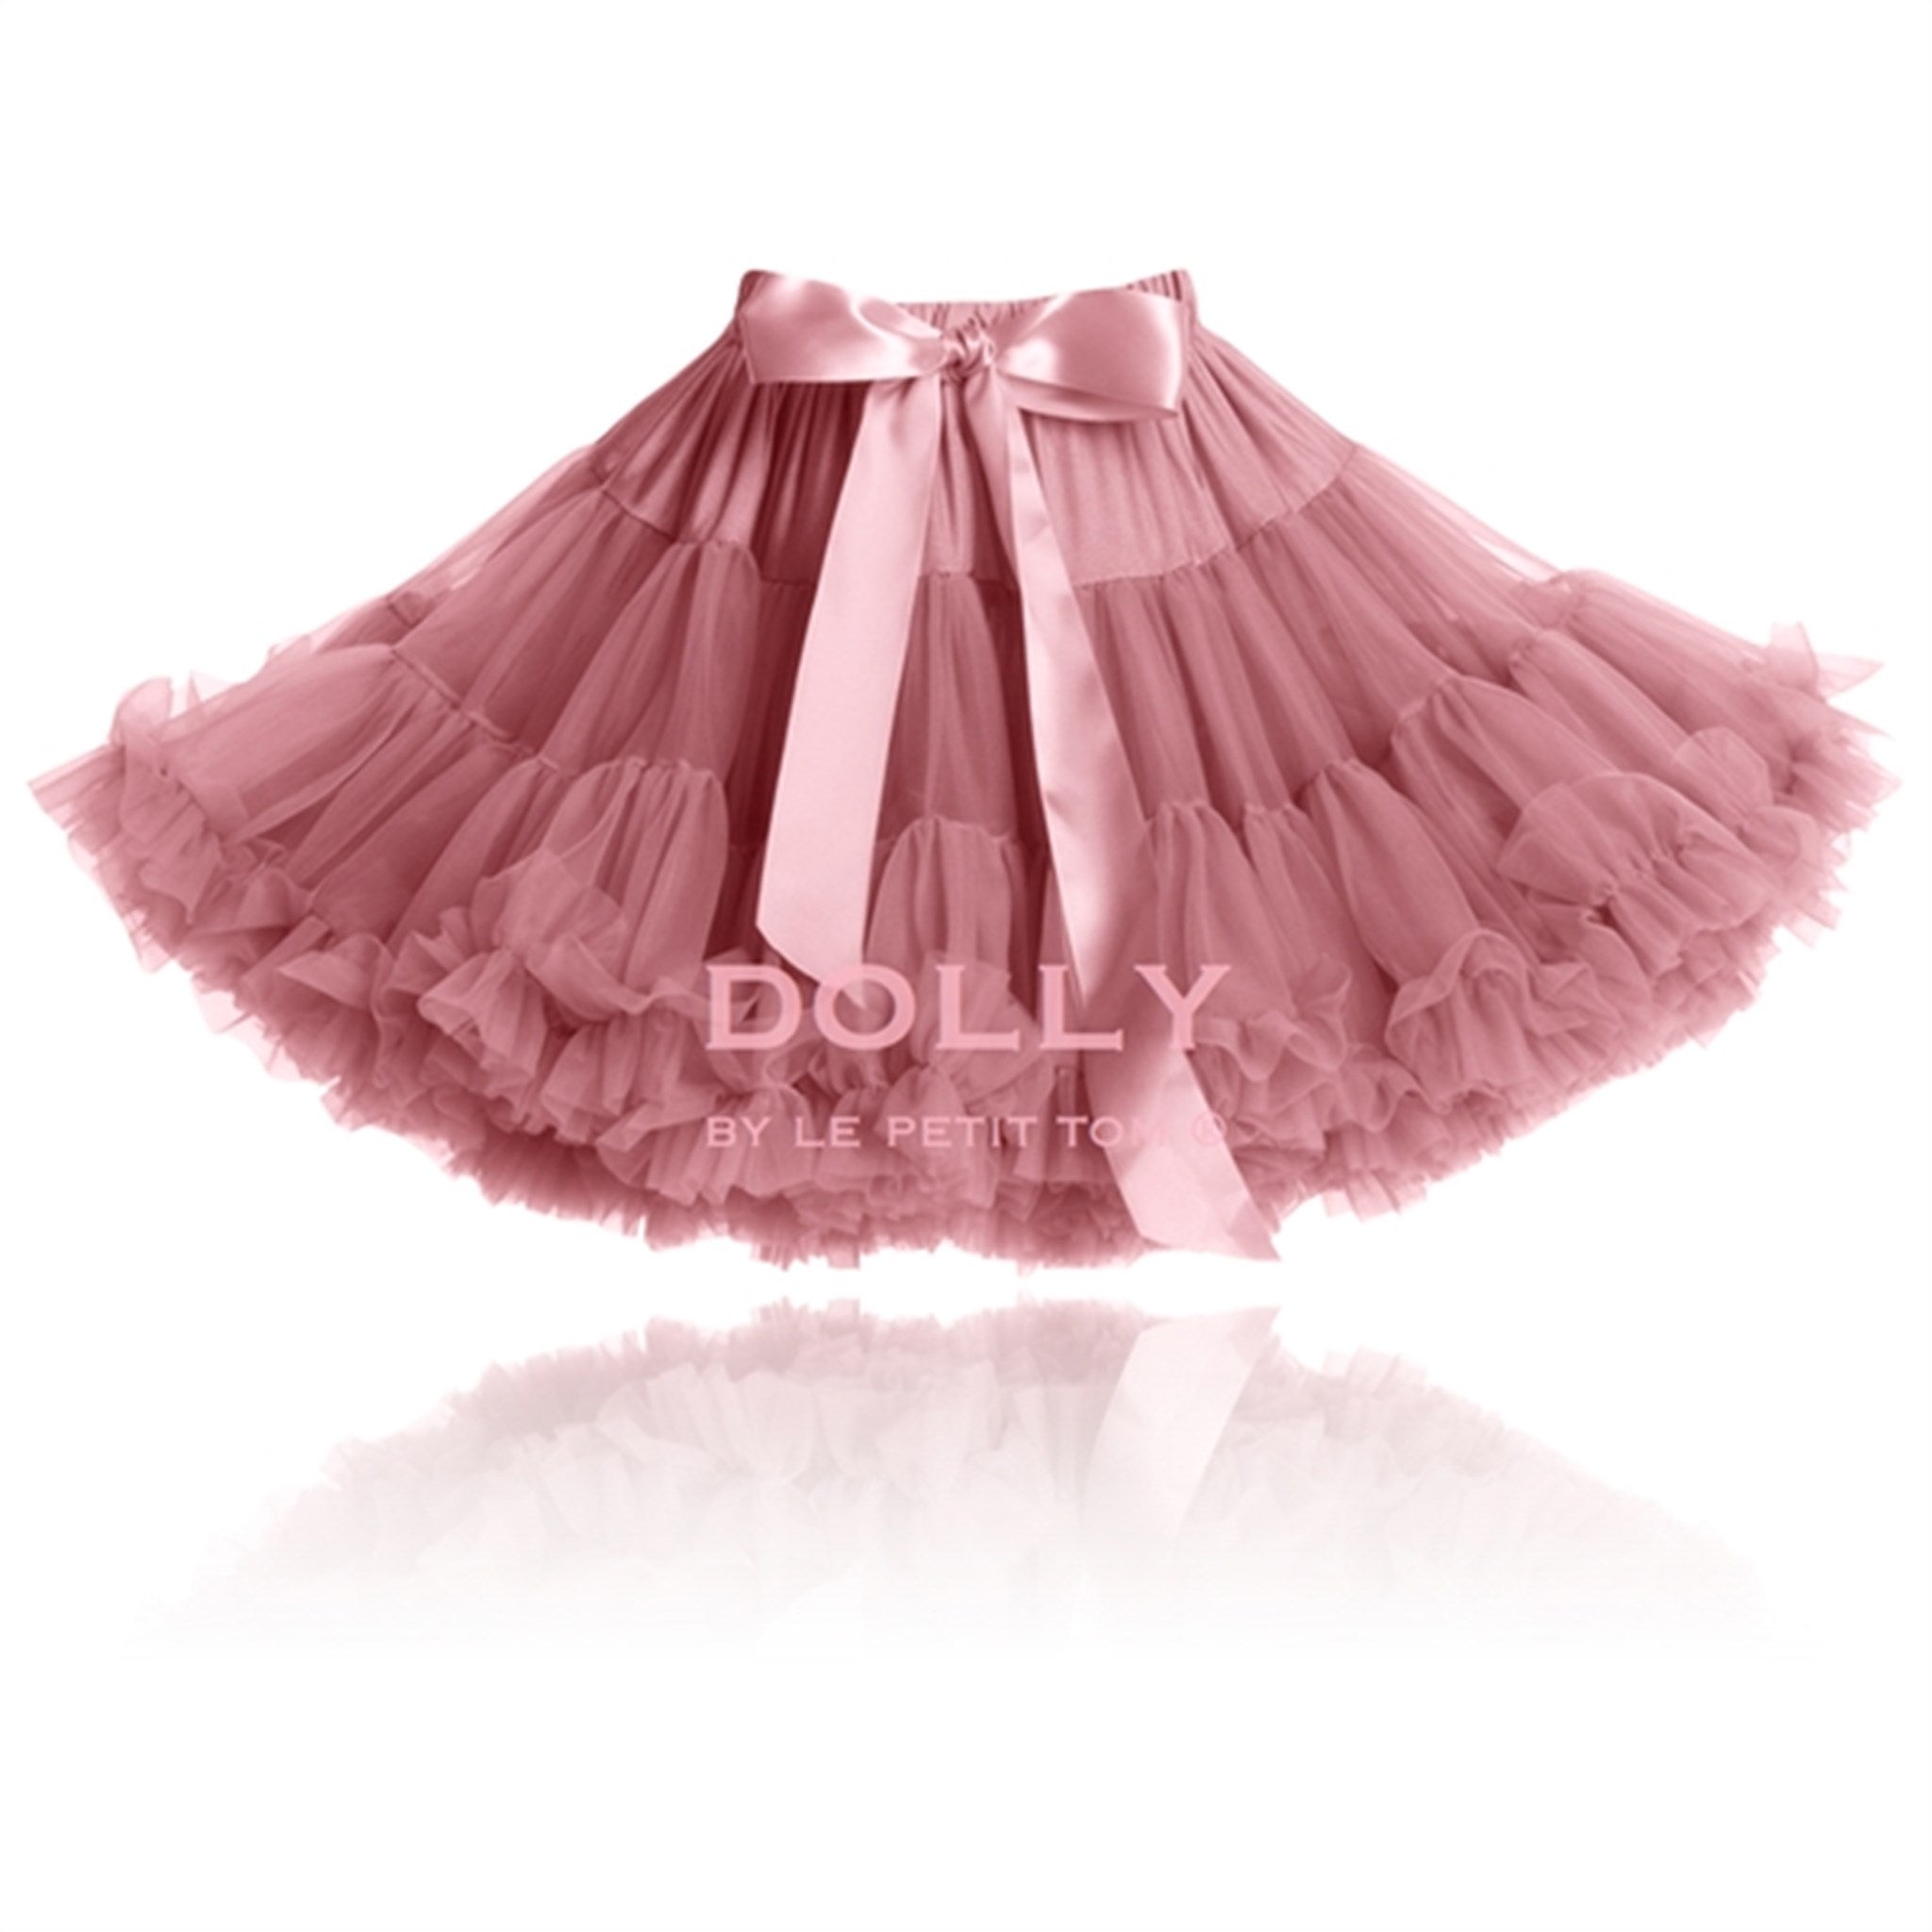 Dolly By Le Petit Tom Pettitskirt Thumbelina Skirt Mauve